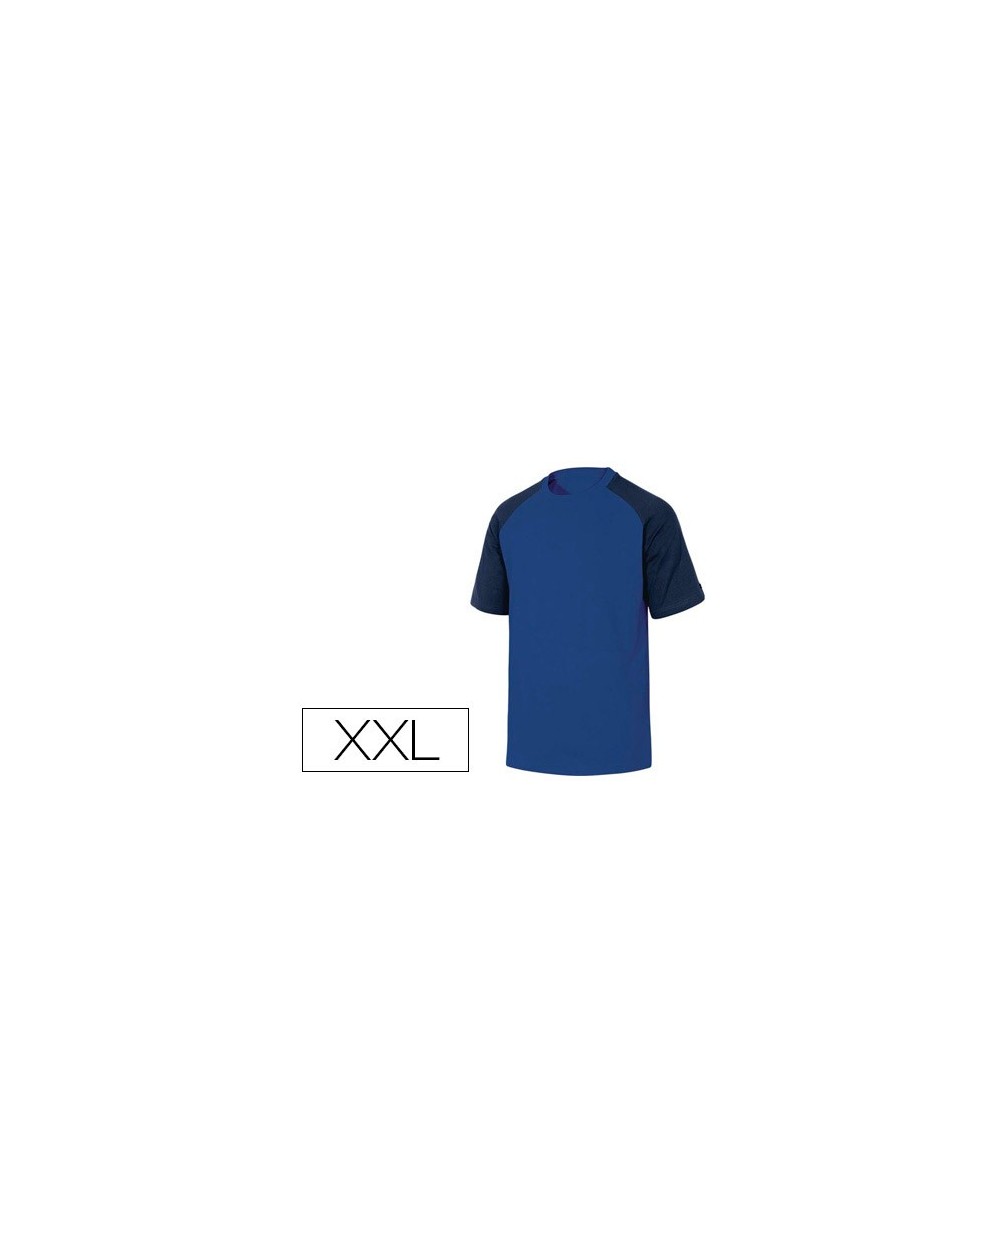 Camiseta de algodon deltaplus color azul talla xxl